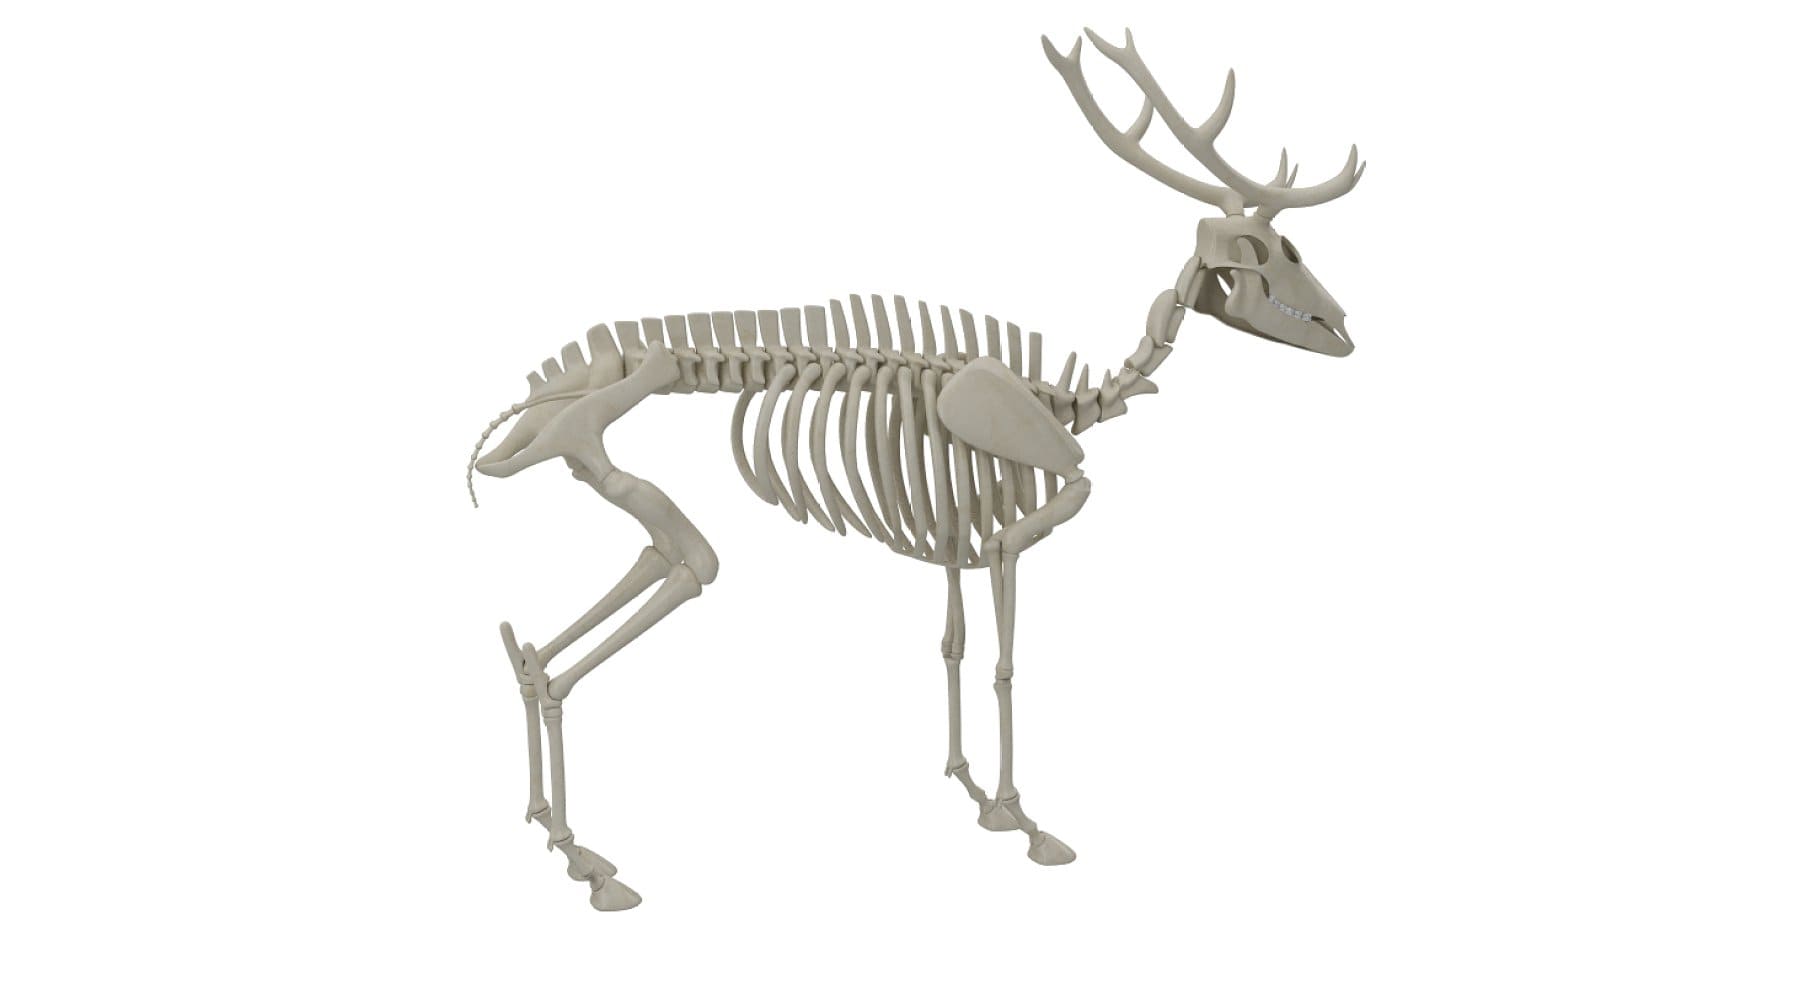 Image of a deer skeleton with long horns.